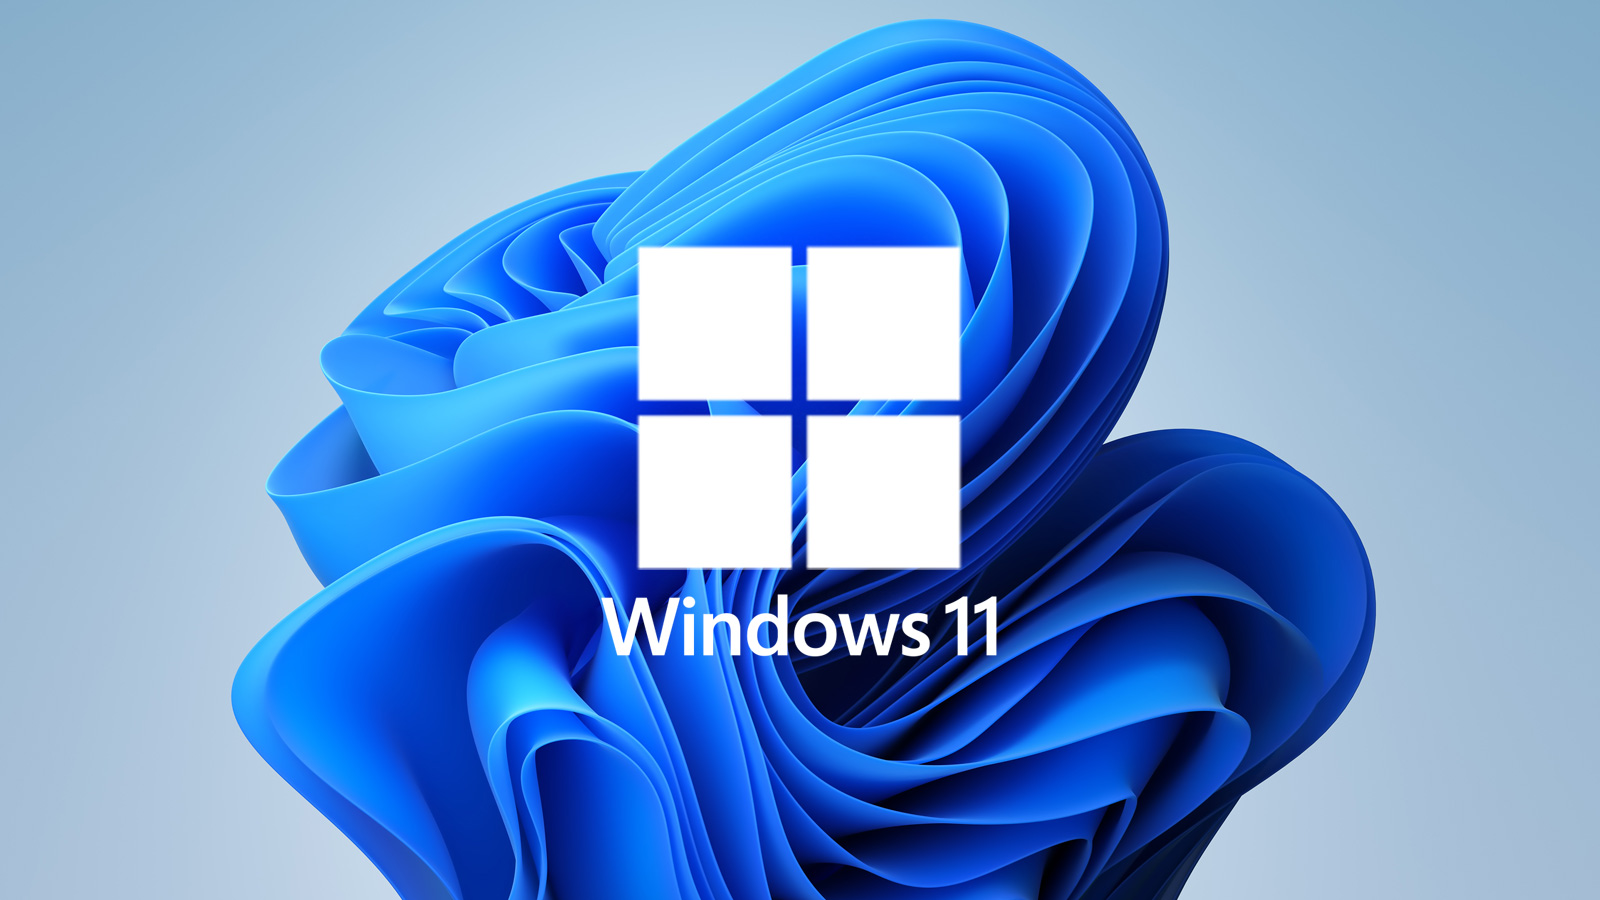 How to Revert to Windows 10?